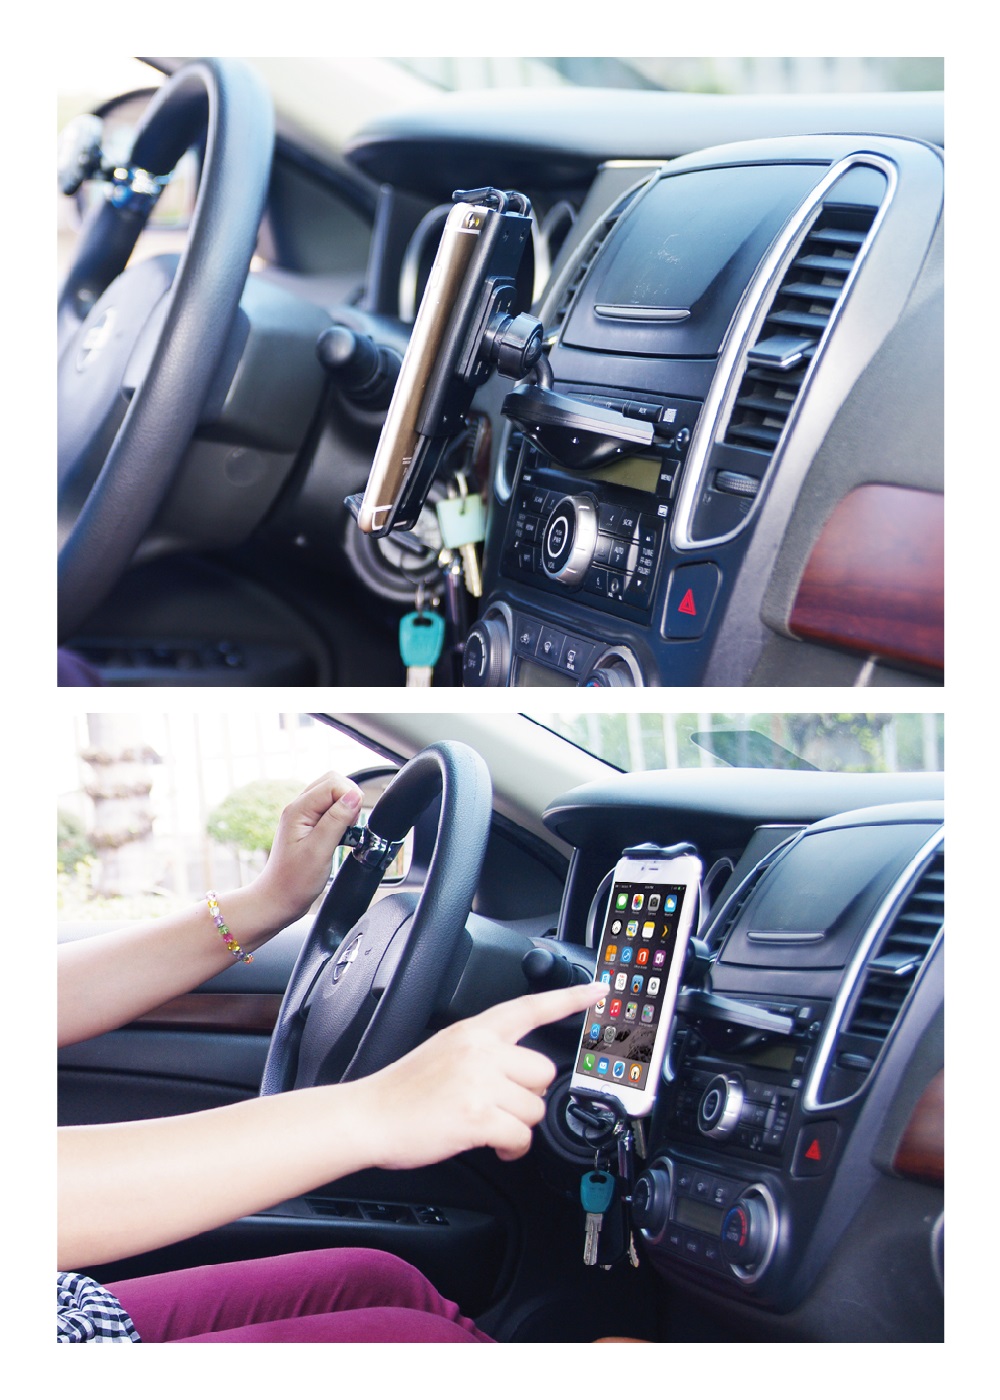 360 Degree CD Slot Car Cell Phone Holder HPA572